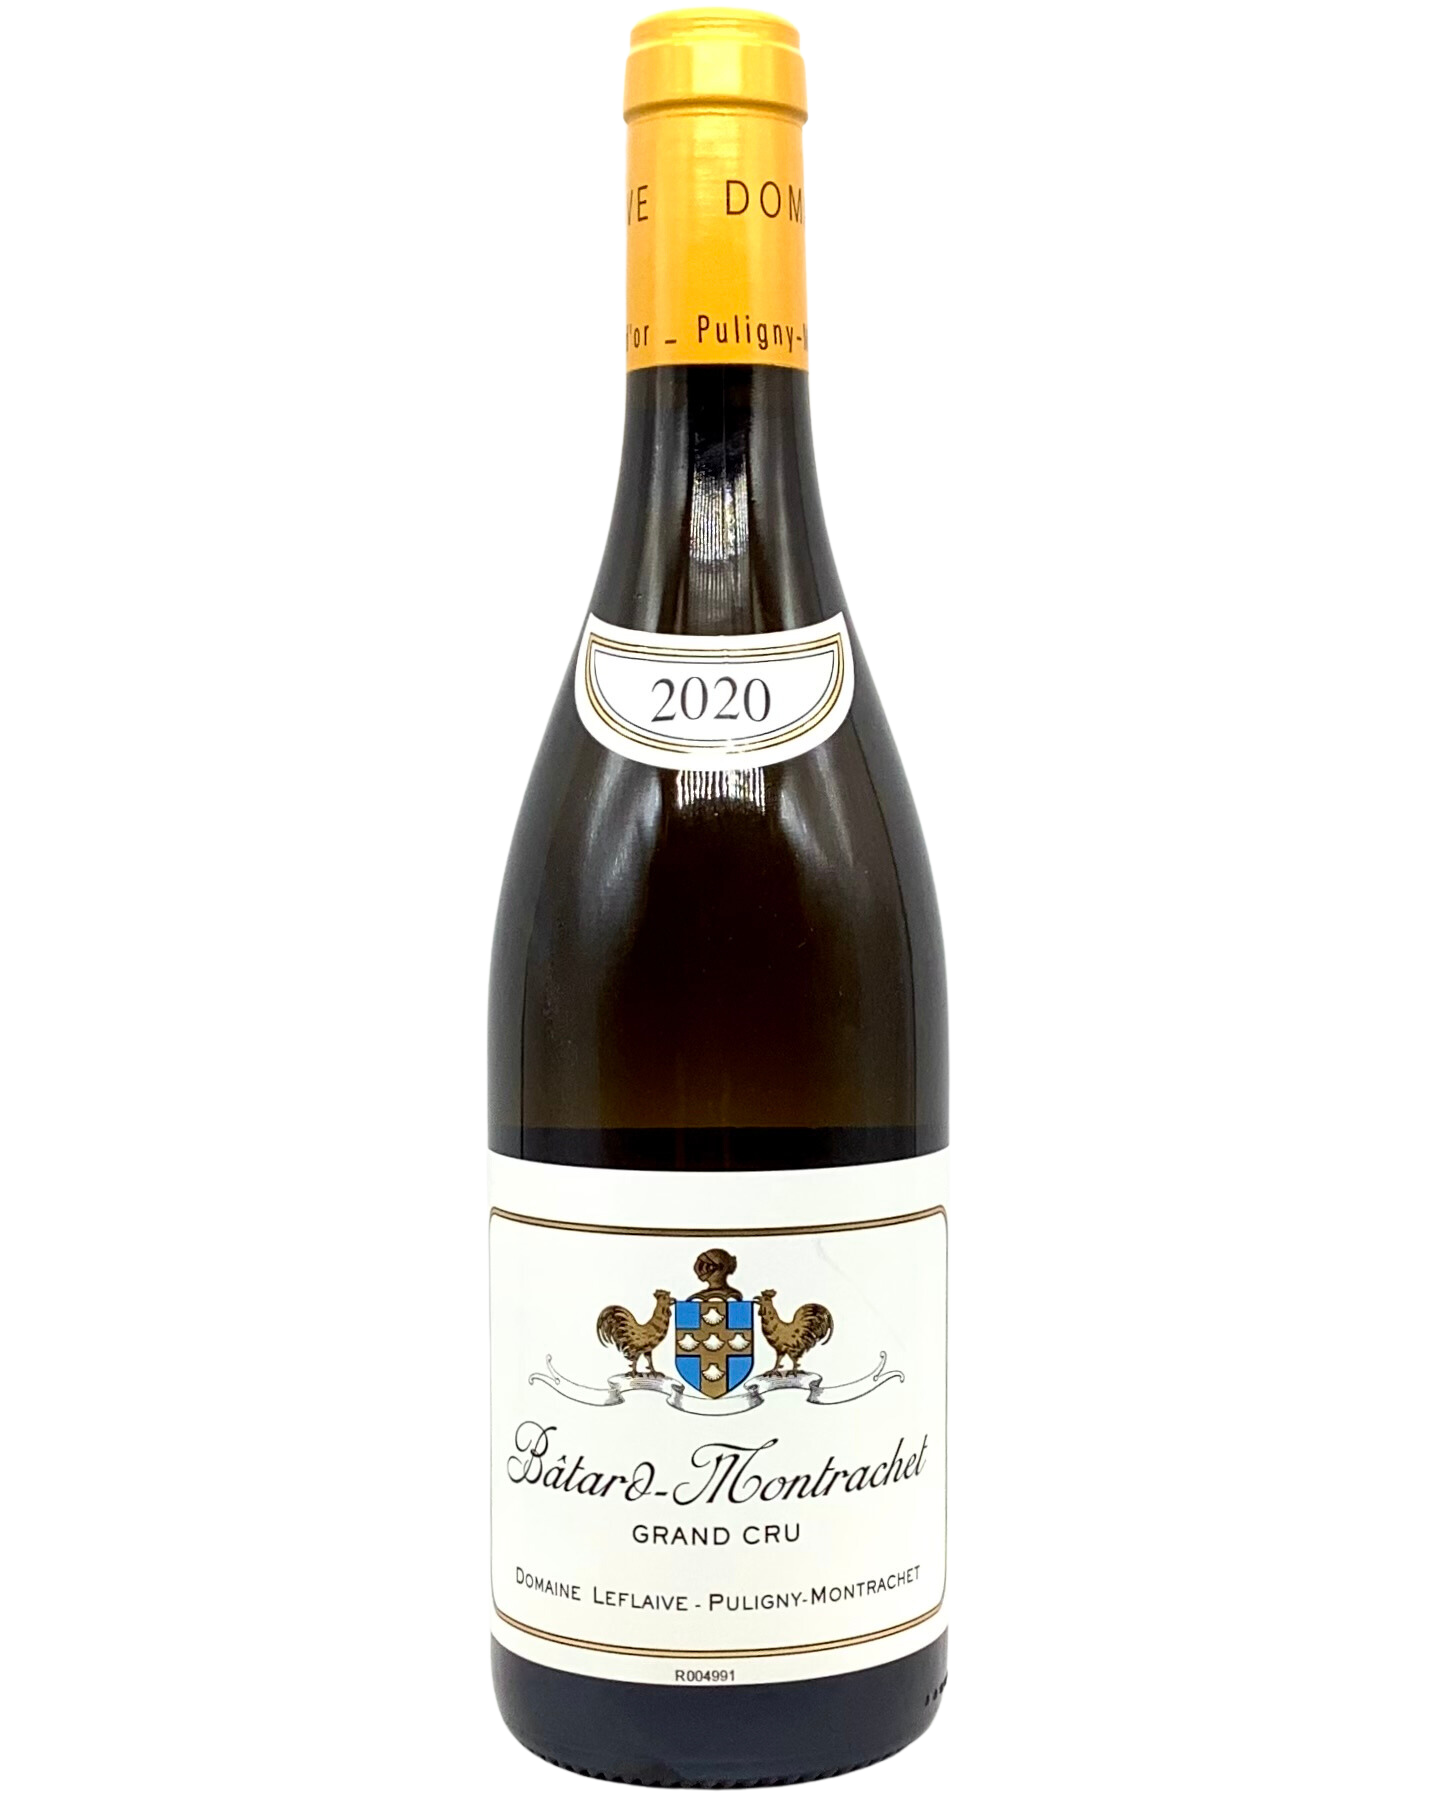 Domaine Leflaive, Chardonnay, Bâtard-Montrachet Grand Cru, Côte de Beaune, Burgundy, France 2020